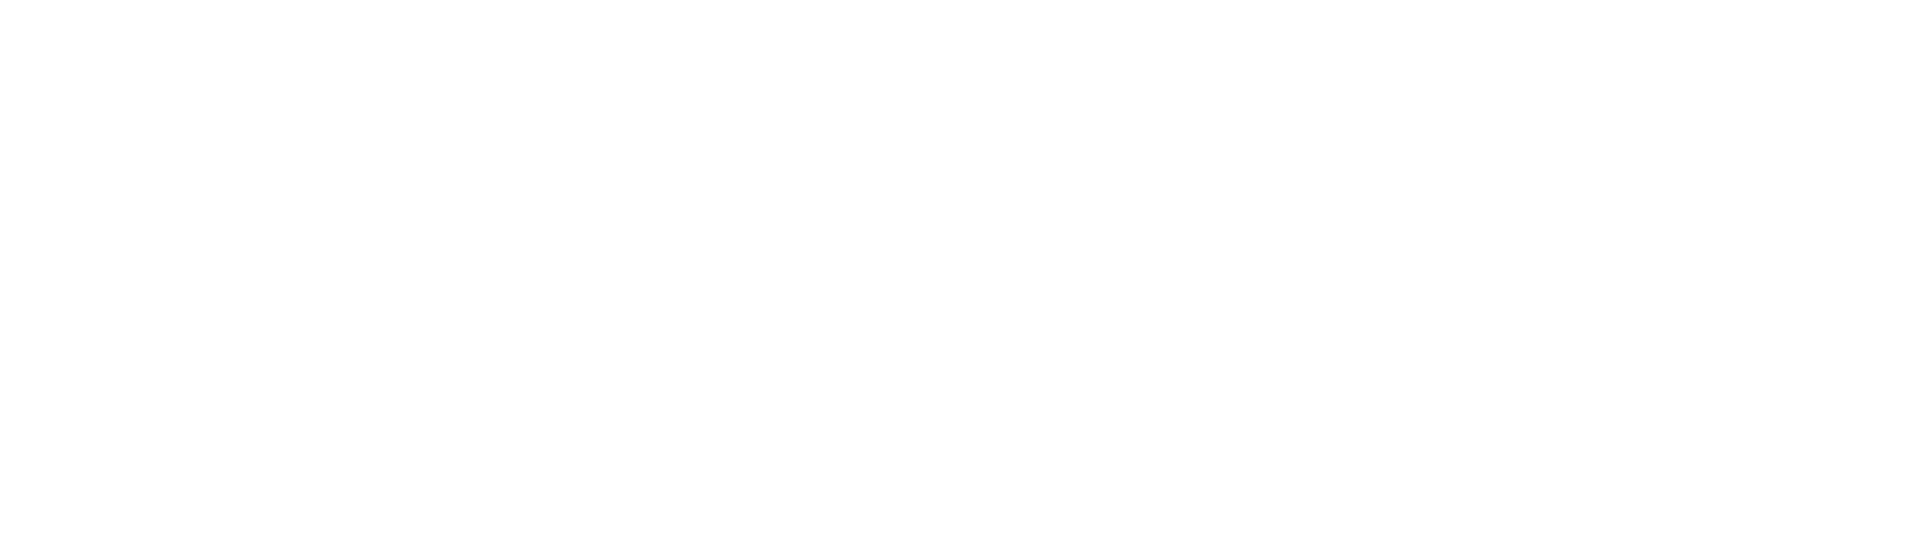 Logo Belvedere Due Nuova California